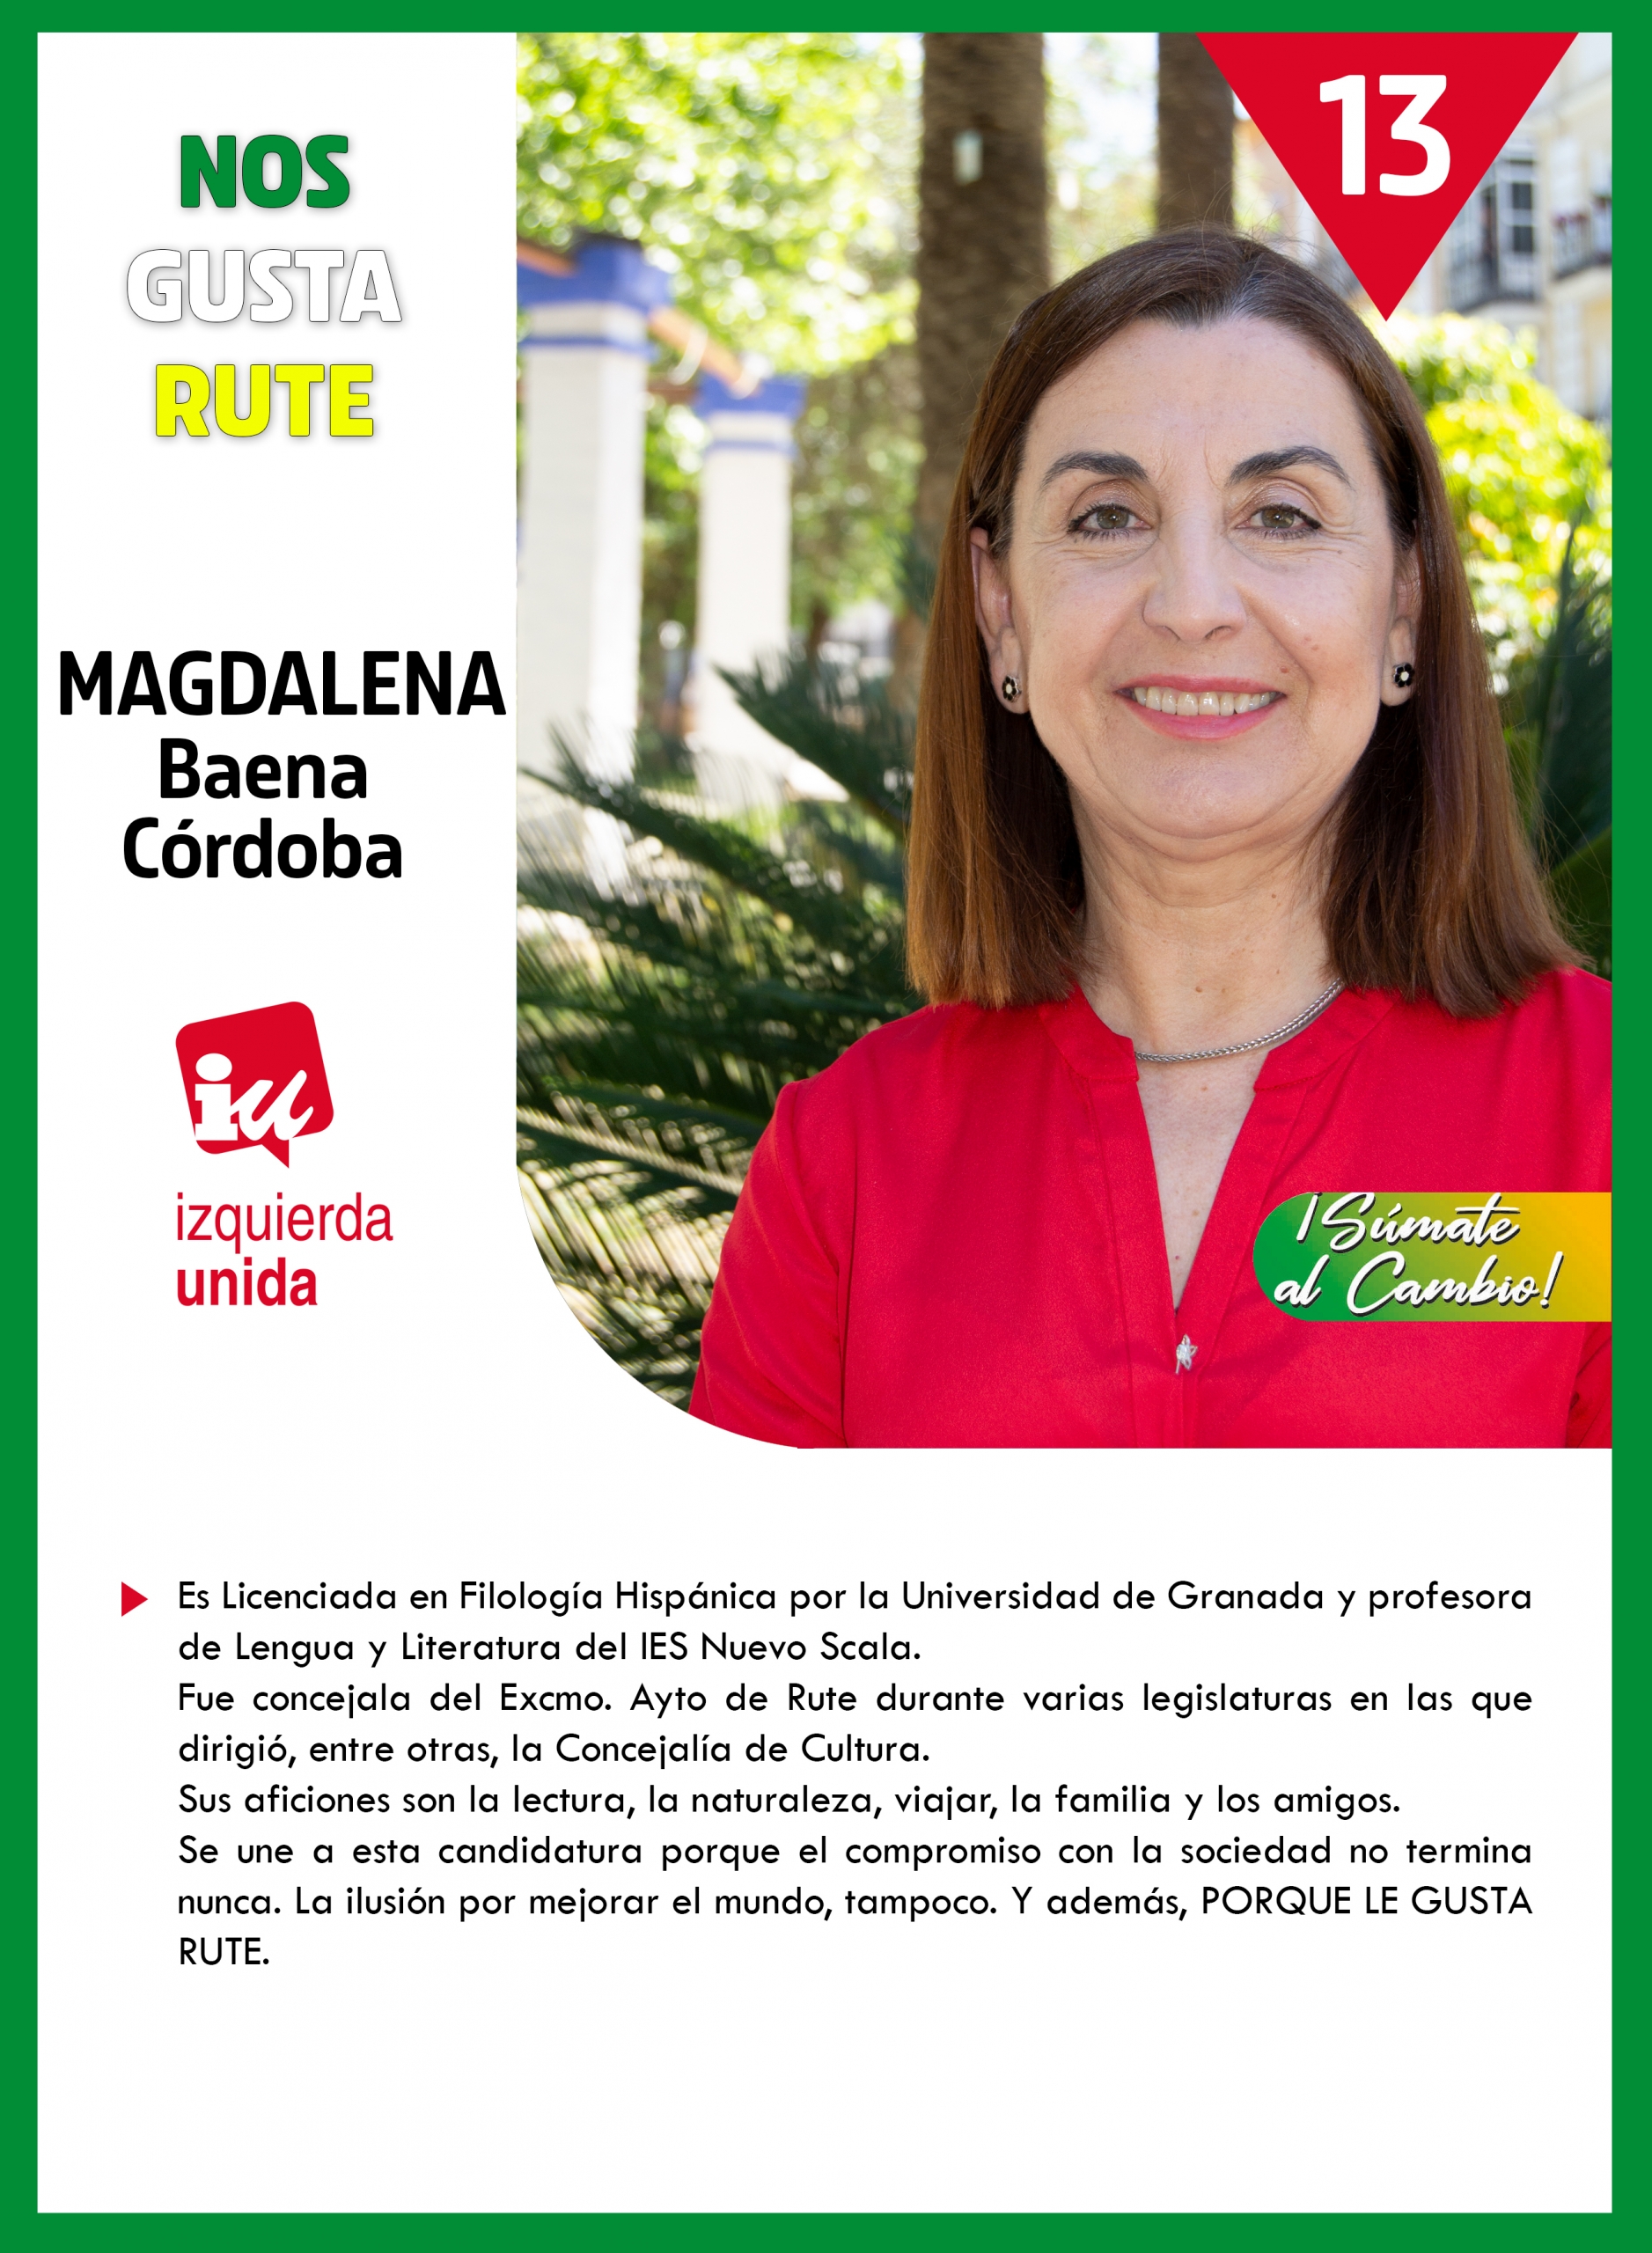 Magdalena Baena Córdoba